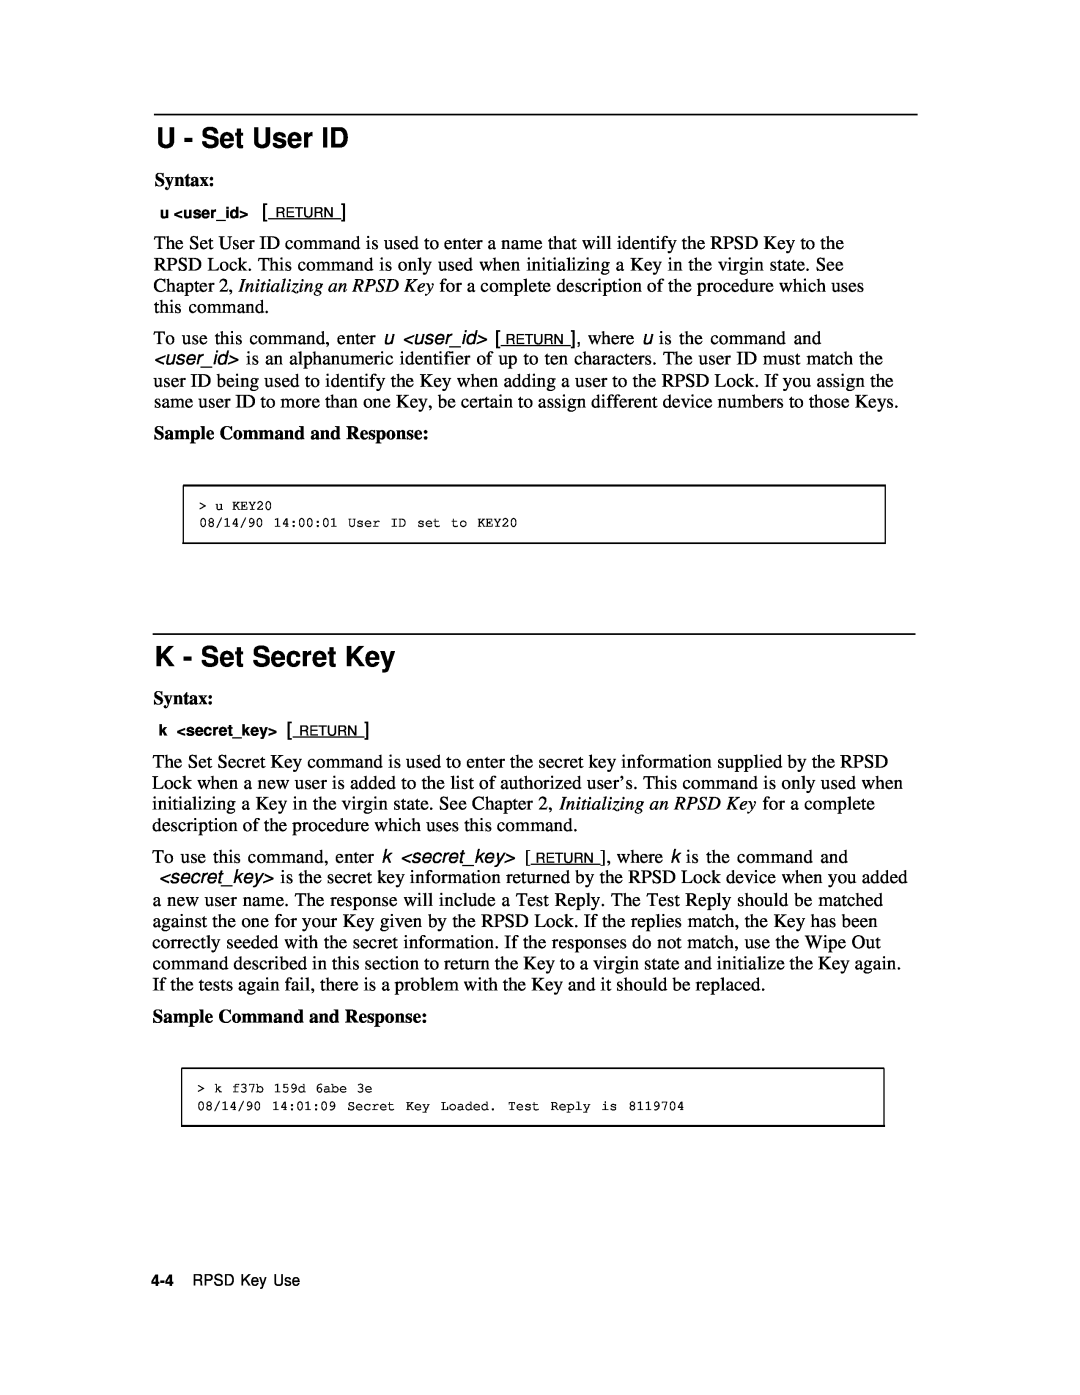 AT&T Remote Port Security Device user manual U - Set User ID, K - Set Secret Key, RPSD Key Use 